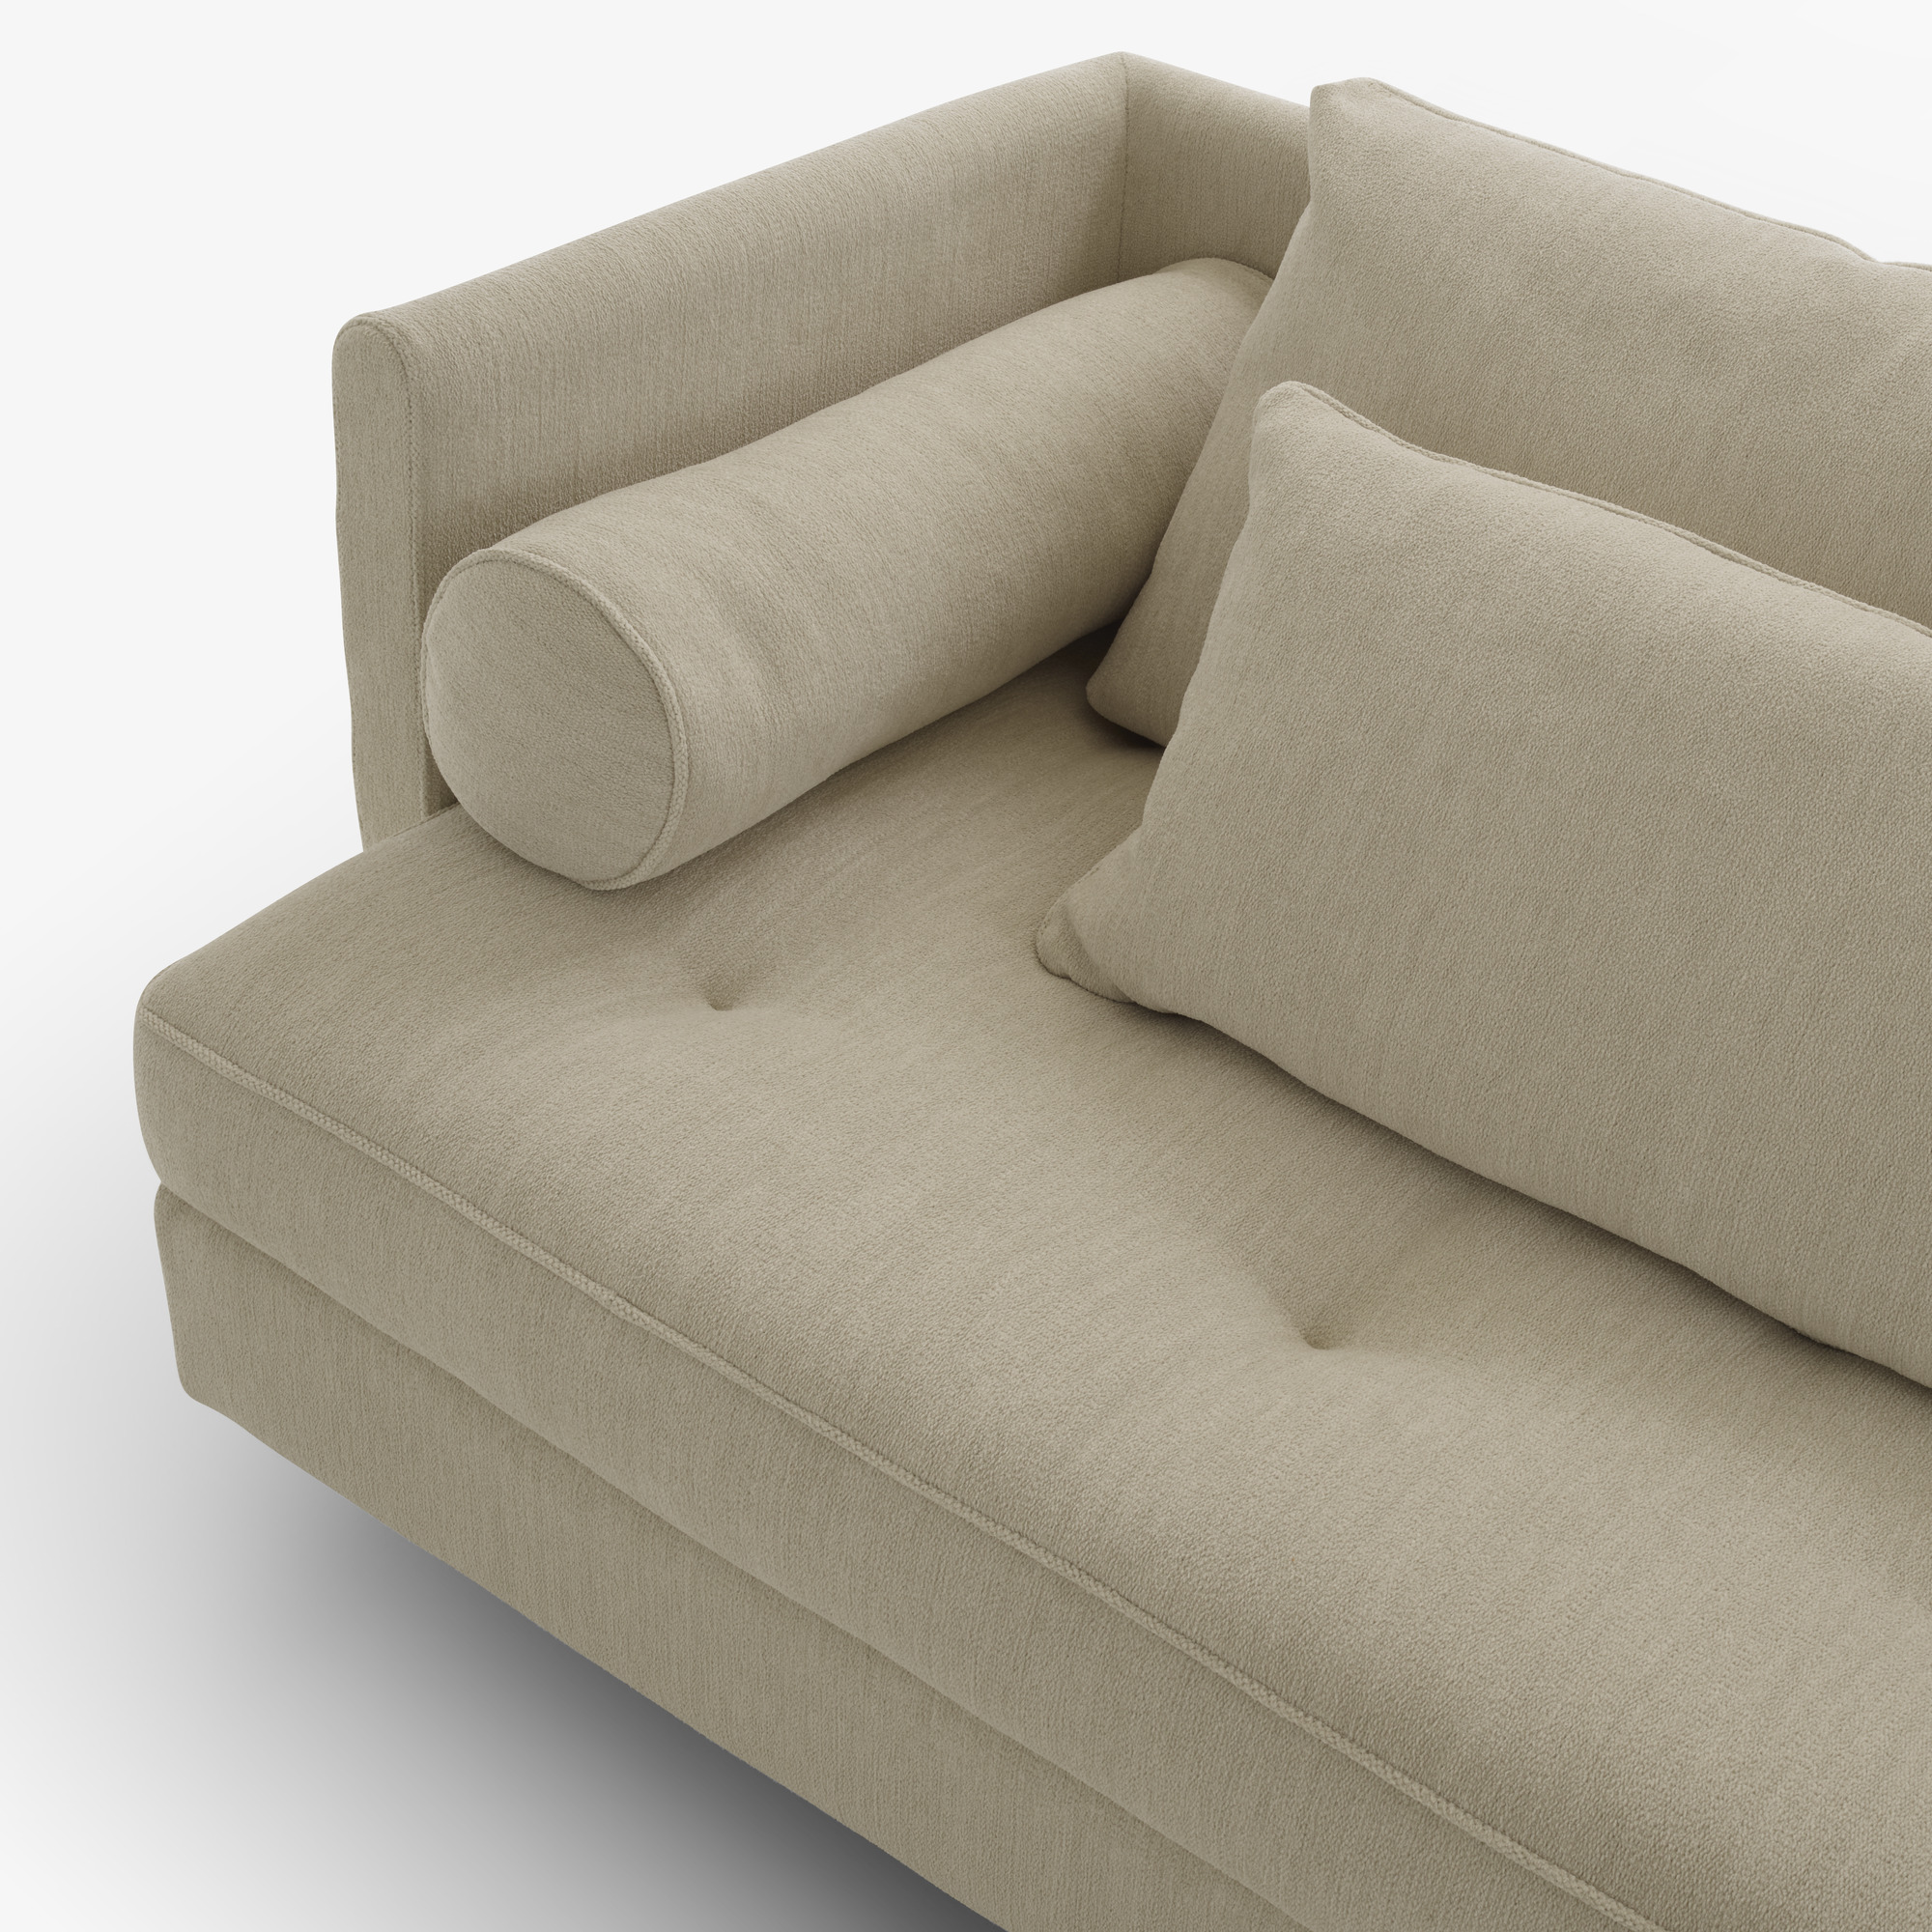 Image 1-arm sofa 7